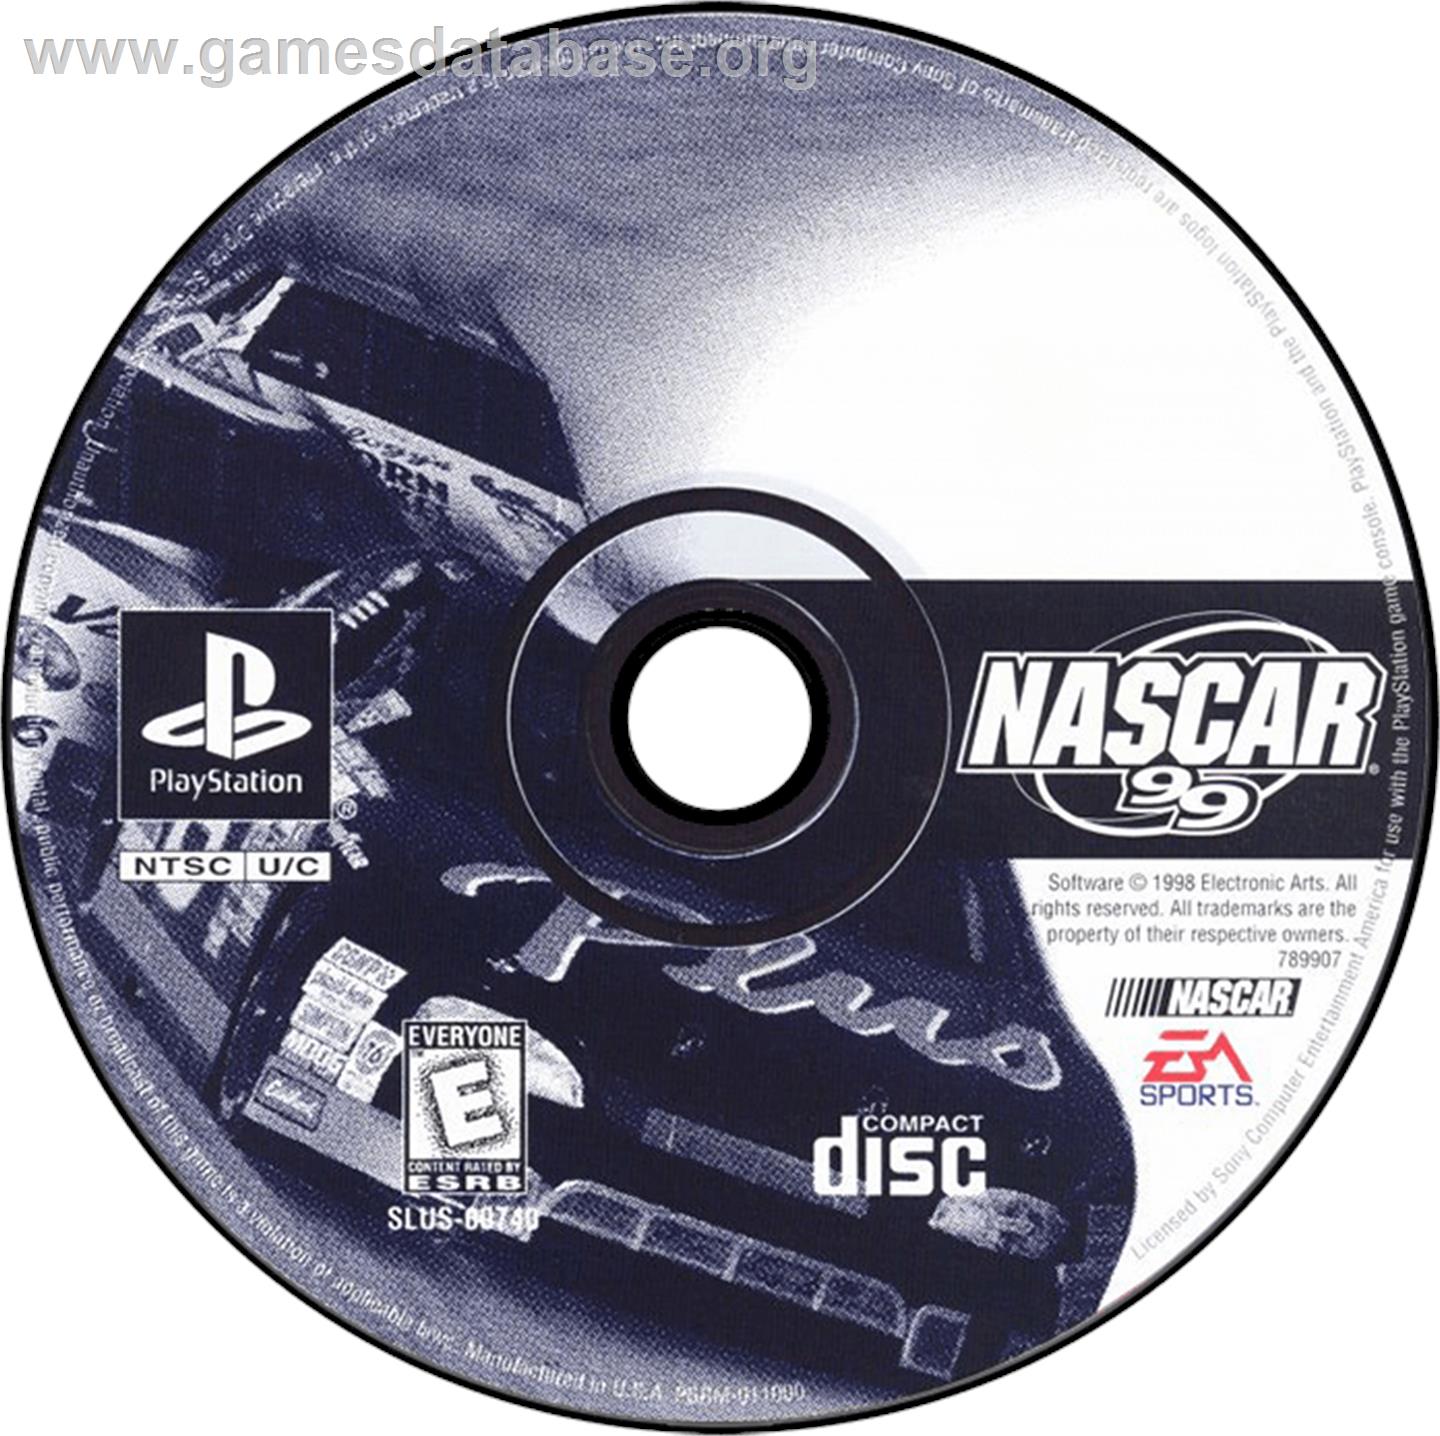 NASCAR 99 - Sony Playstation - Artwork - Disc